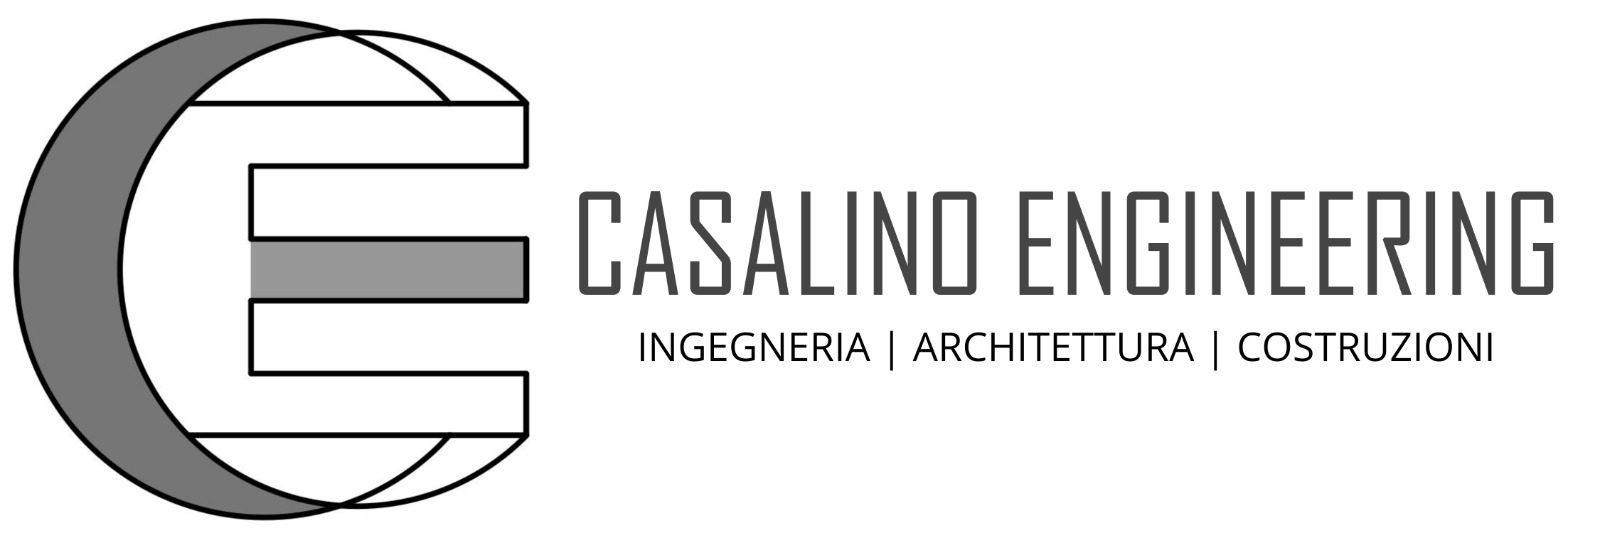 CASALINO ENGINEERING